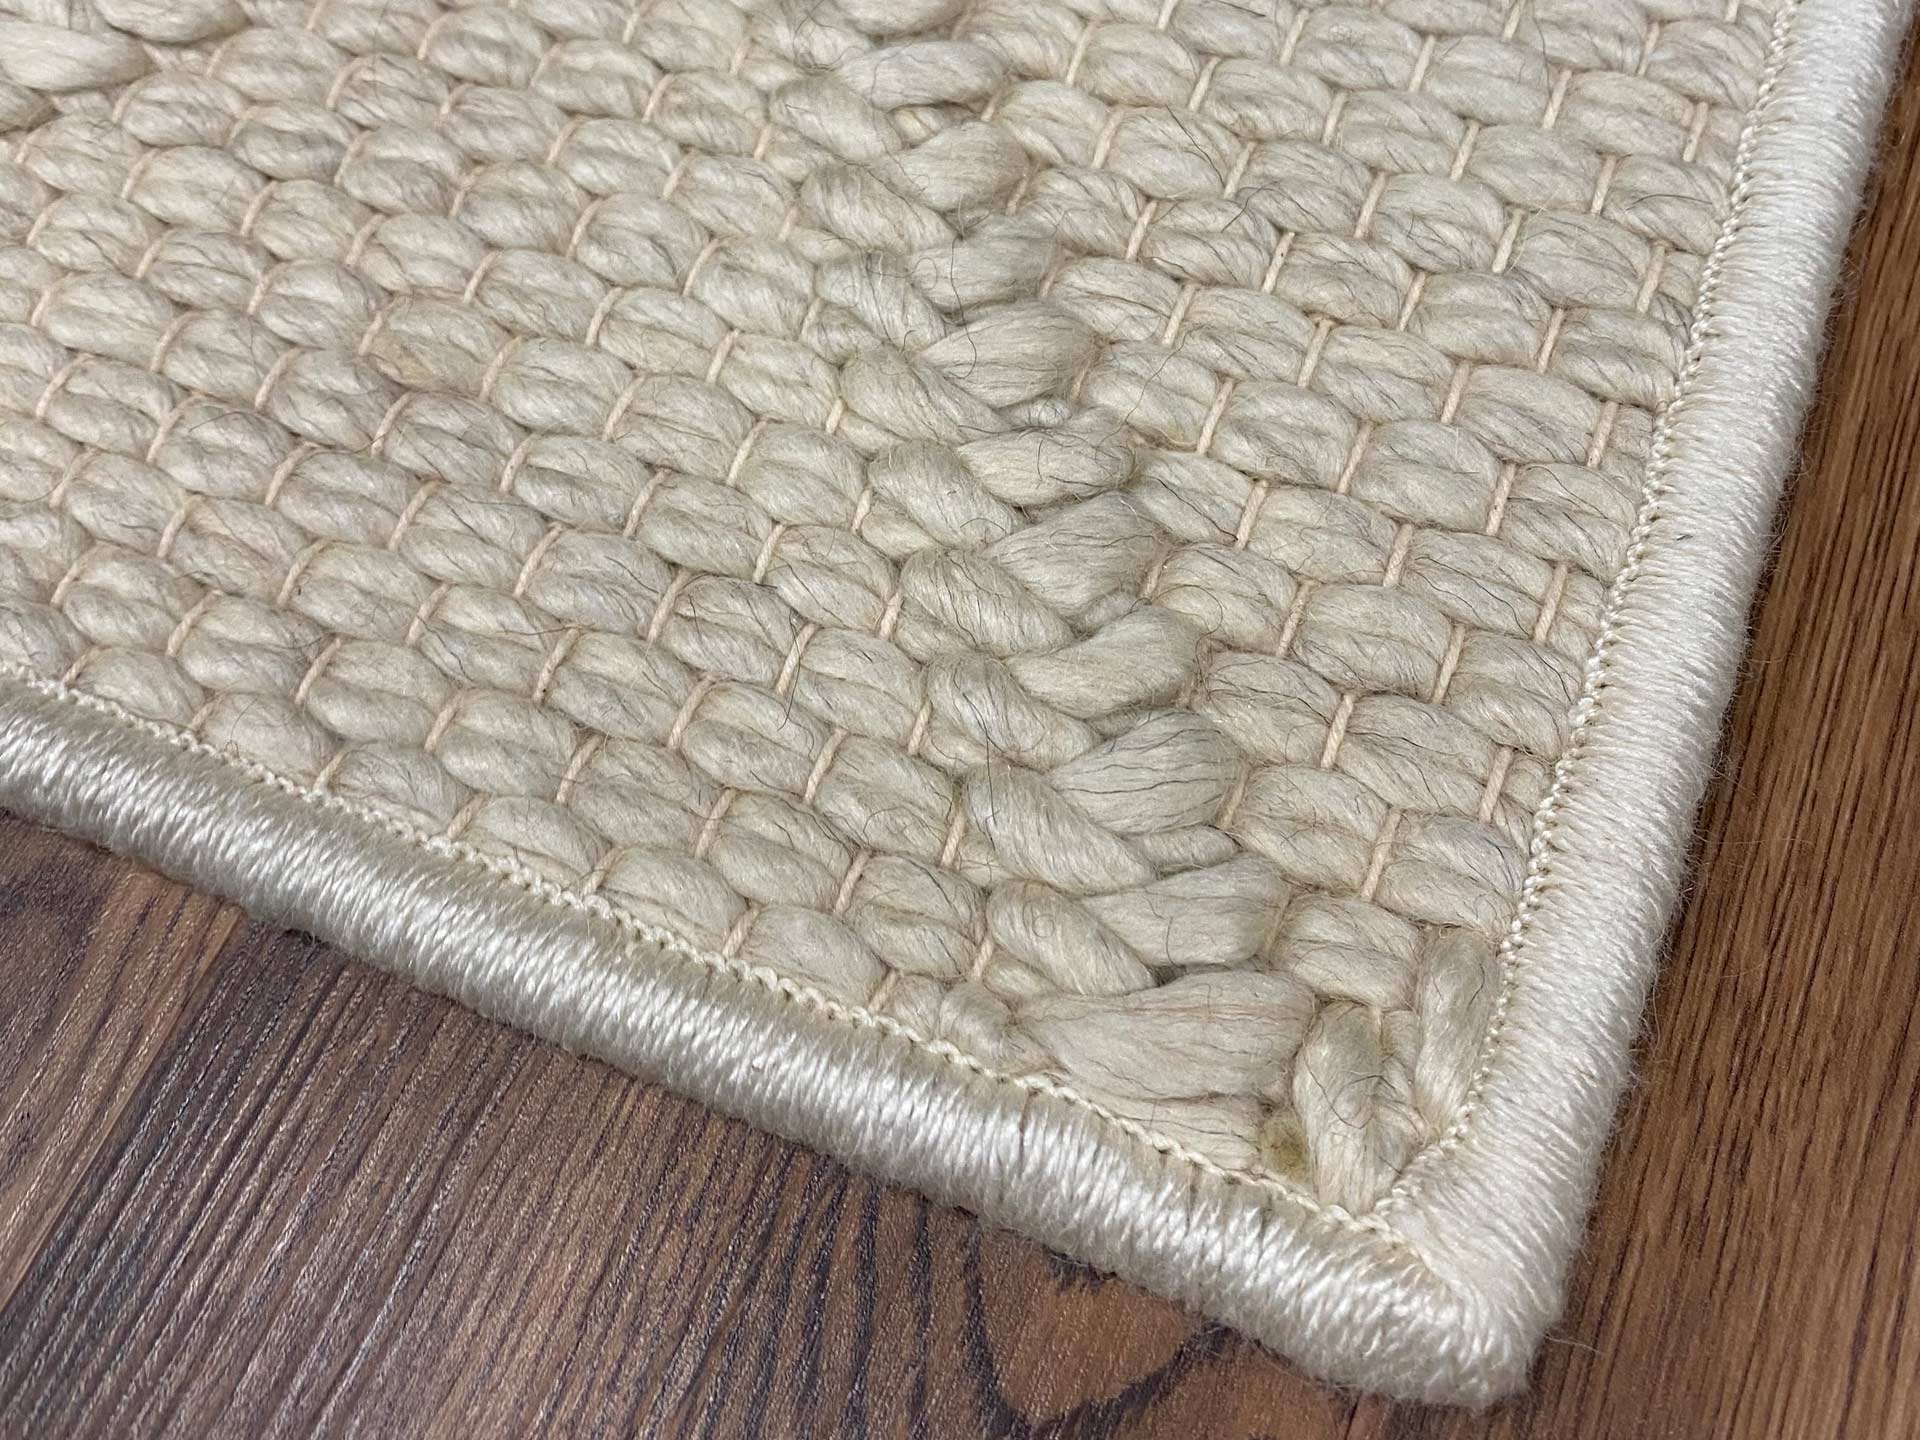 Textured rug with a machine serge edge.